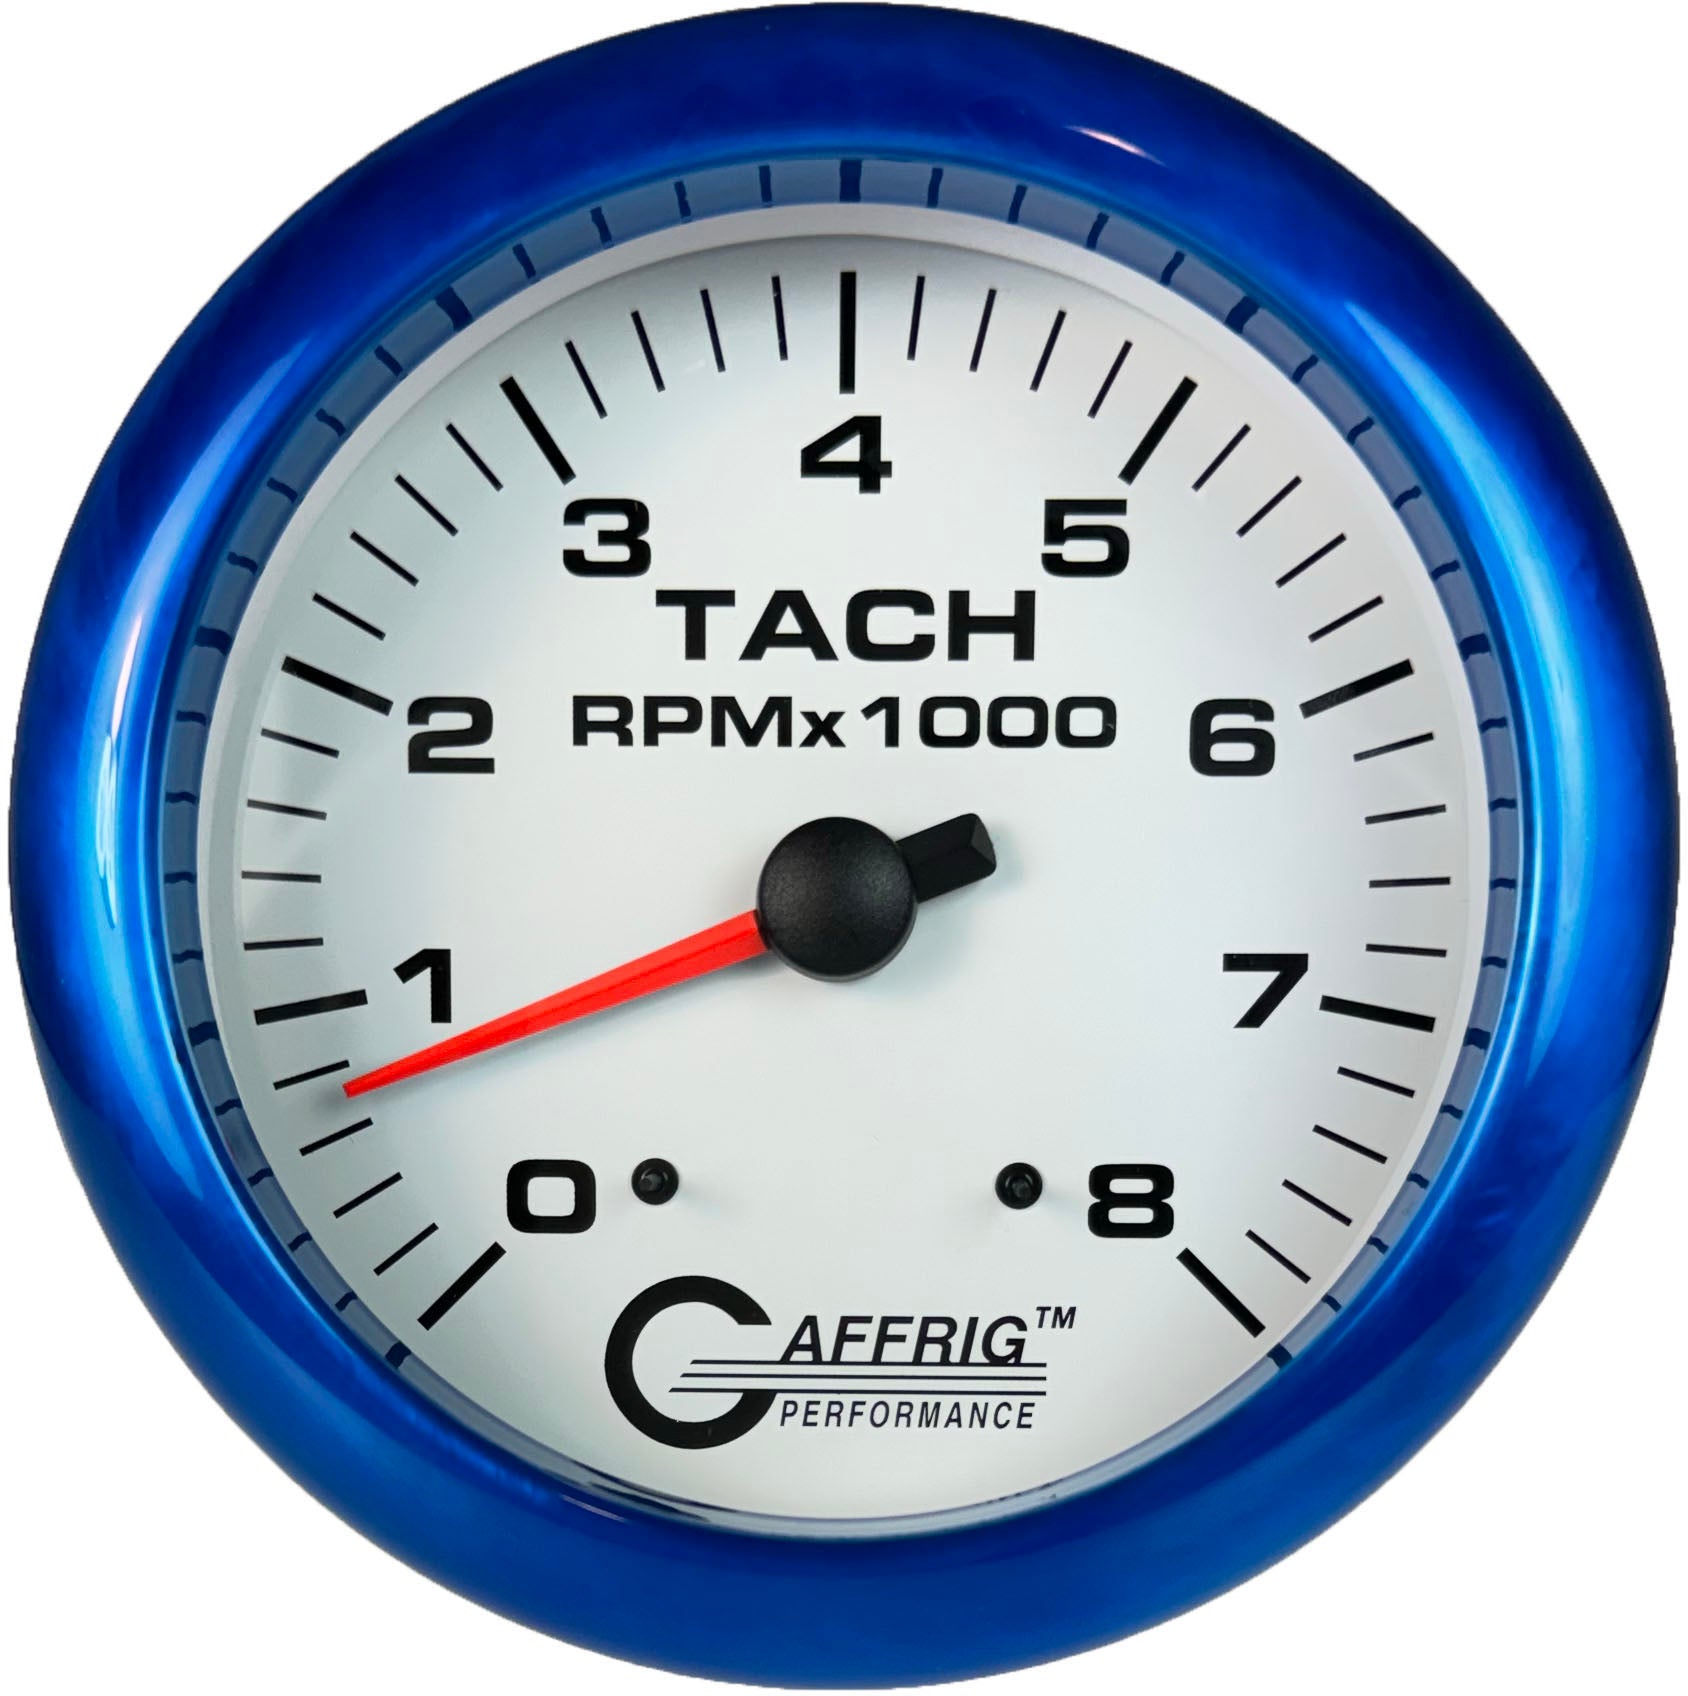 GAFFRIG PART #10019 4 5/8 INCH ELECTRIC TACHOMETER GAUGE 0-8000 RPM WHITE BLUE